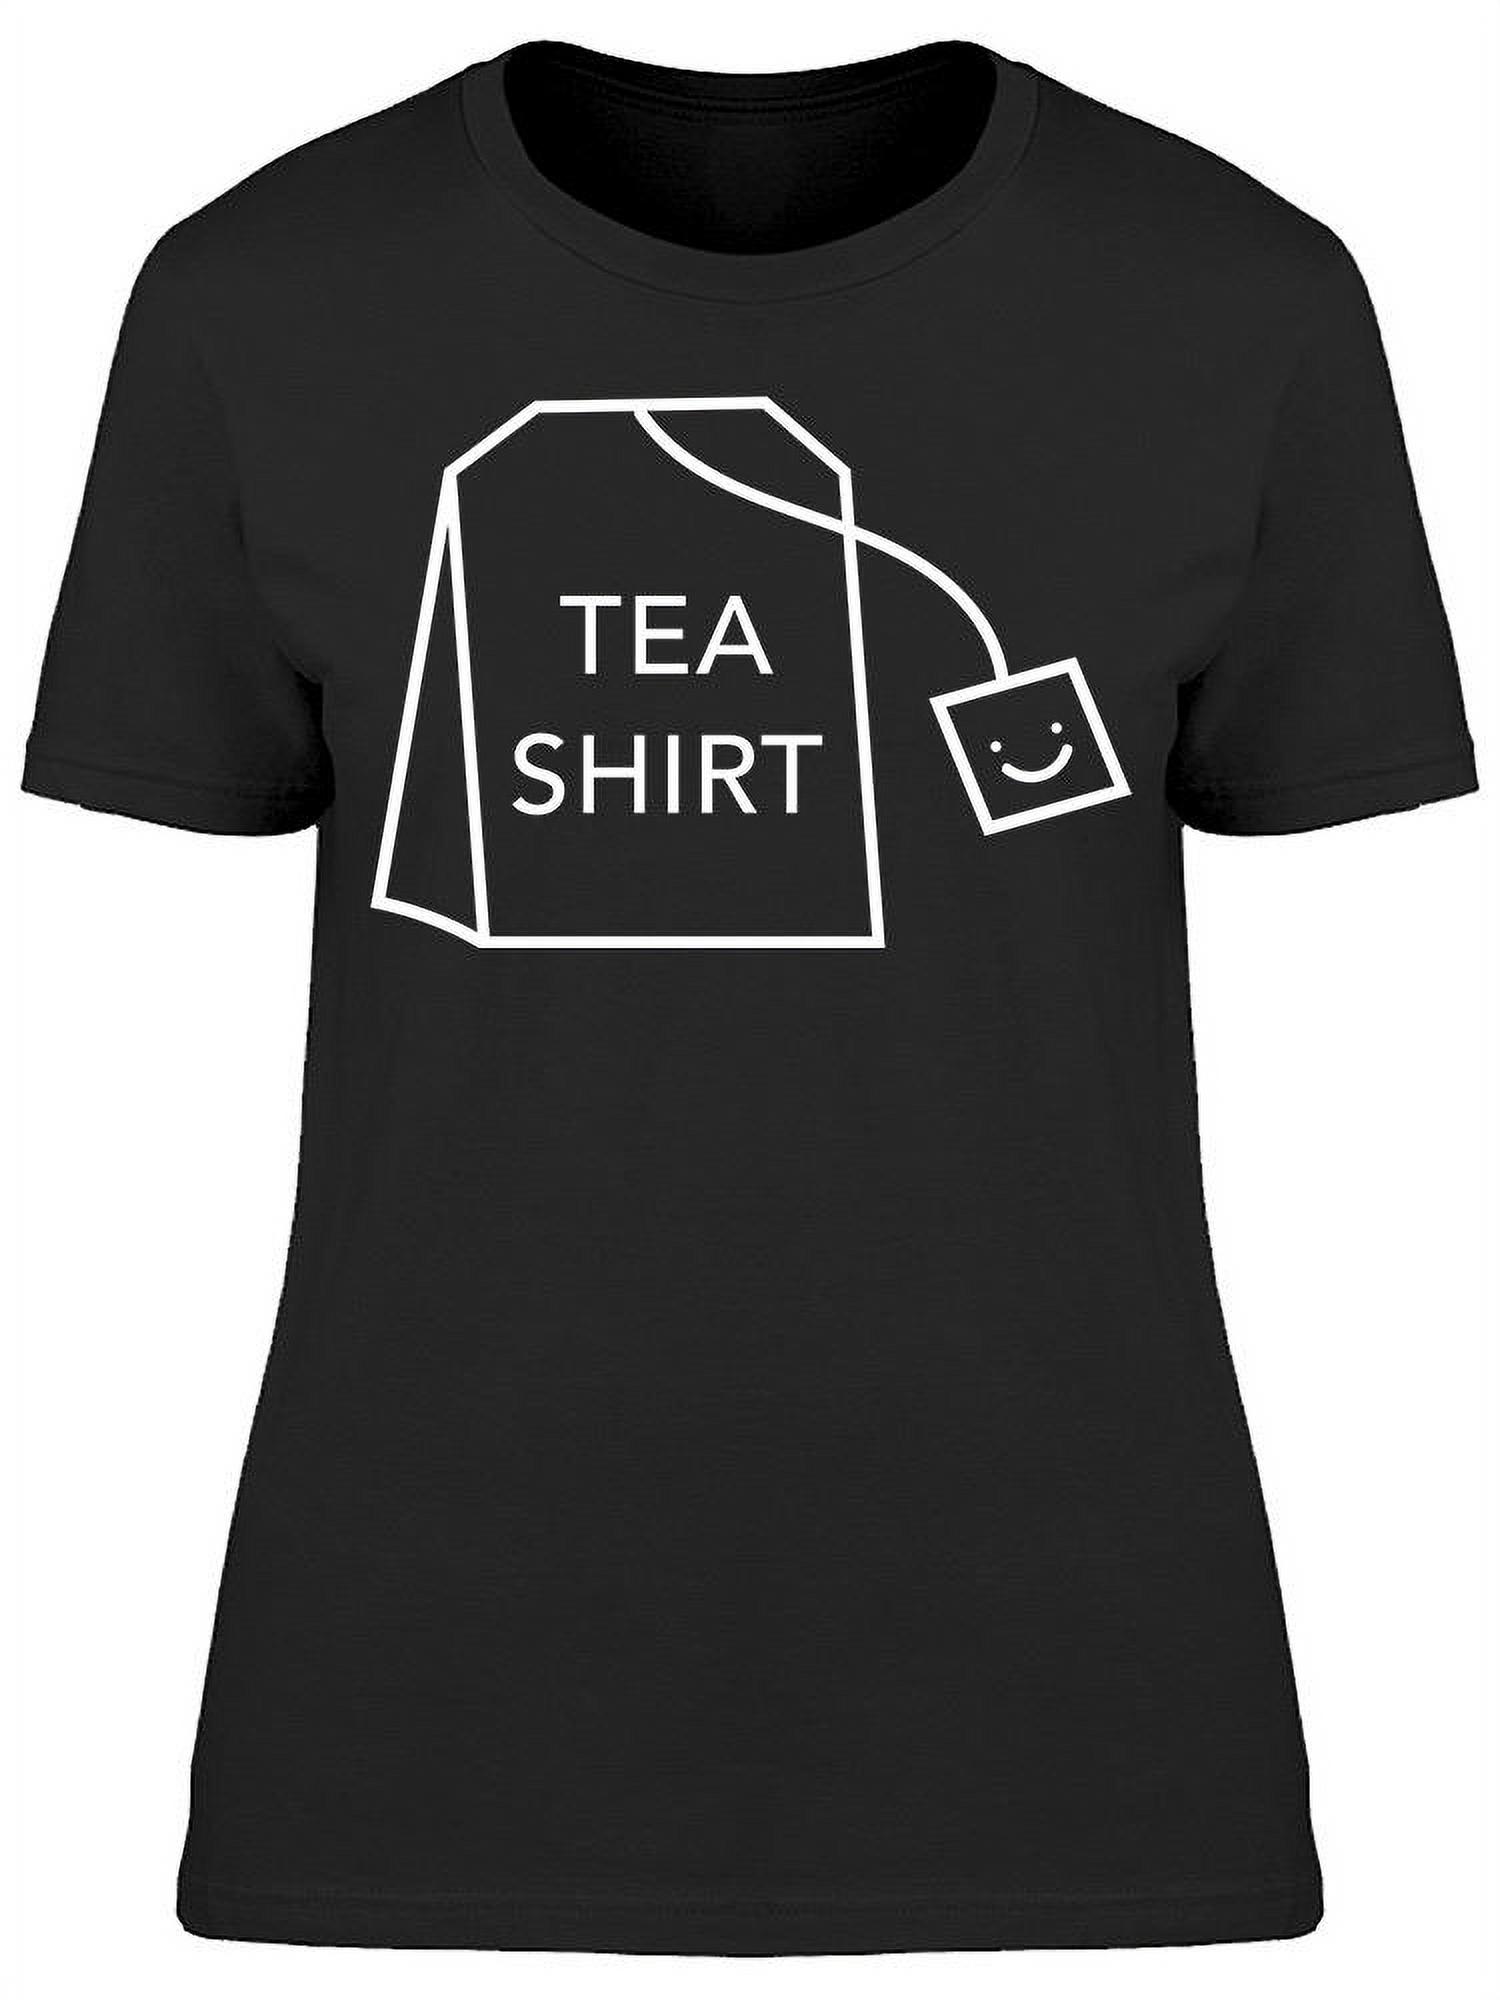 Tea Shirt Women's T-shirt - image 1 of 2